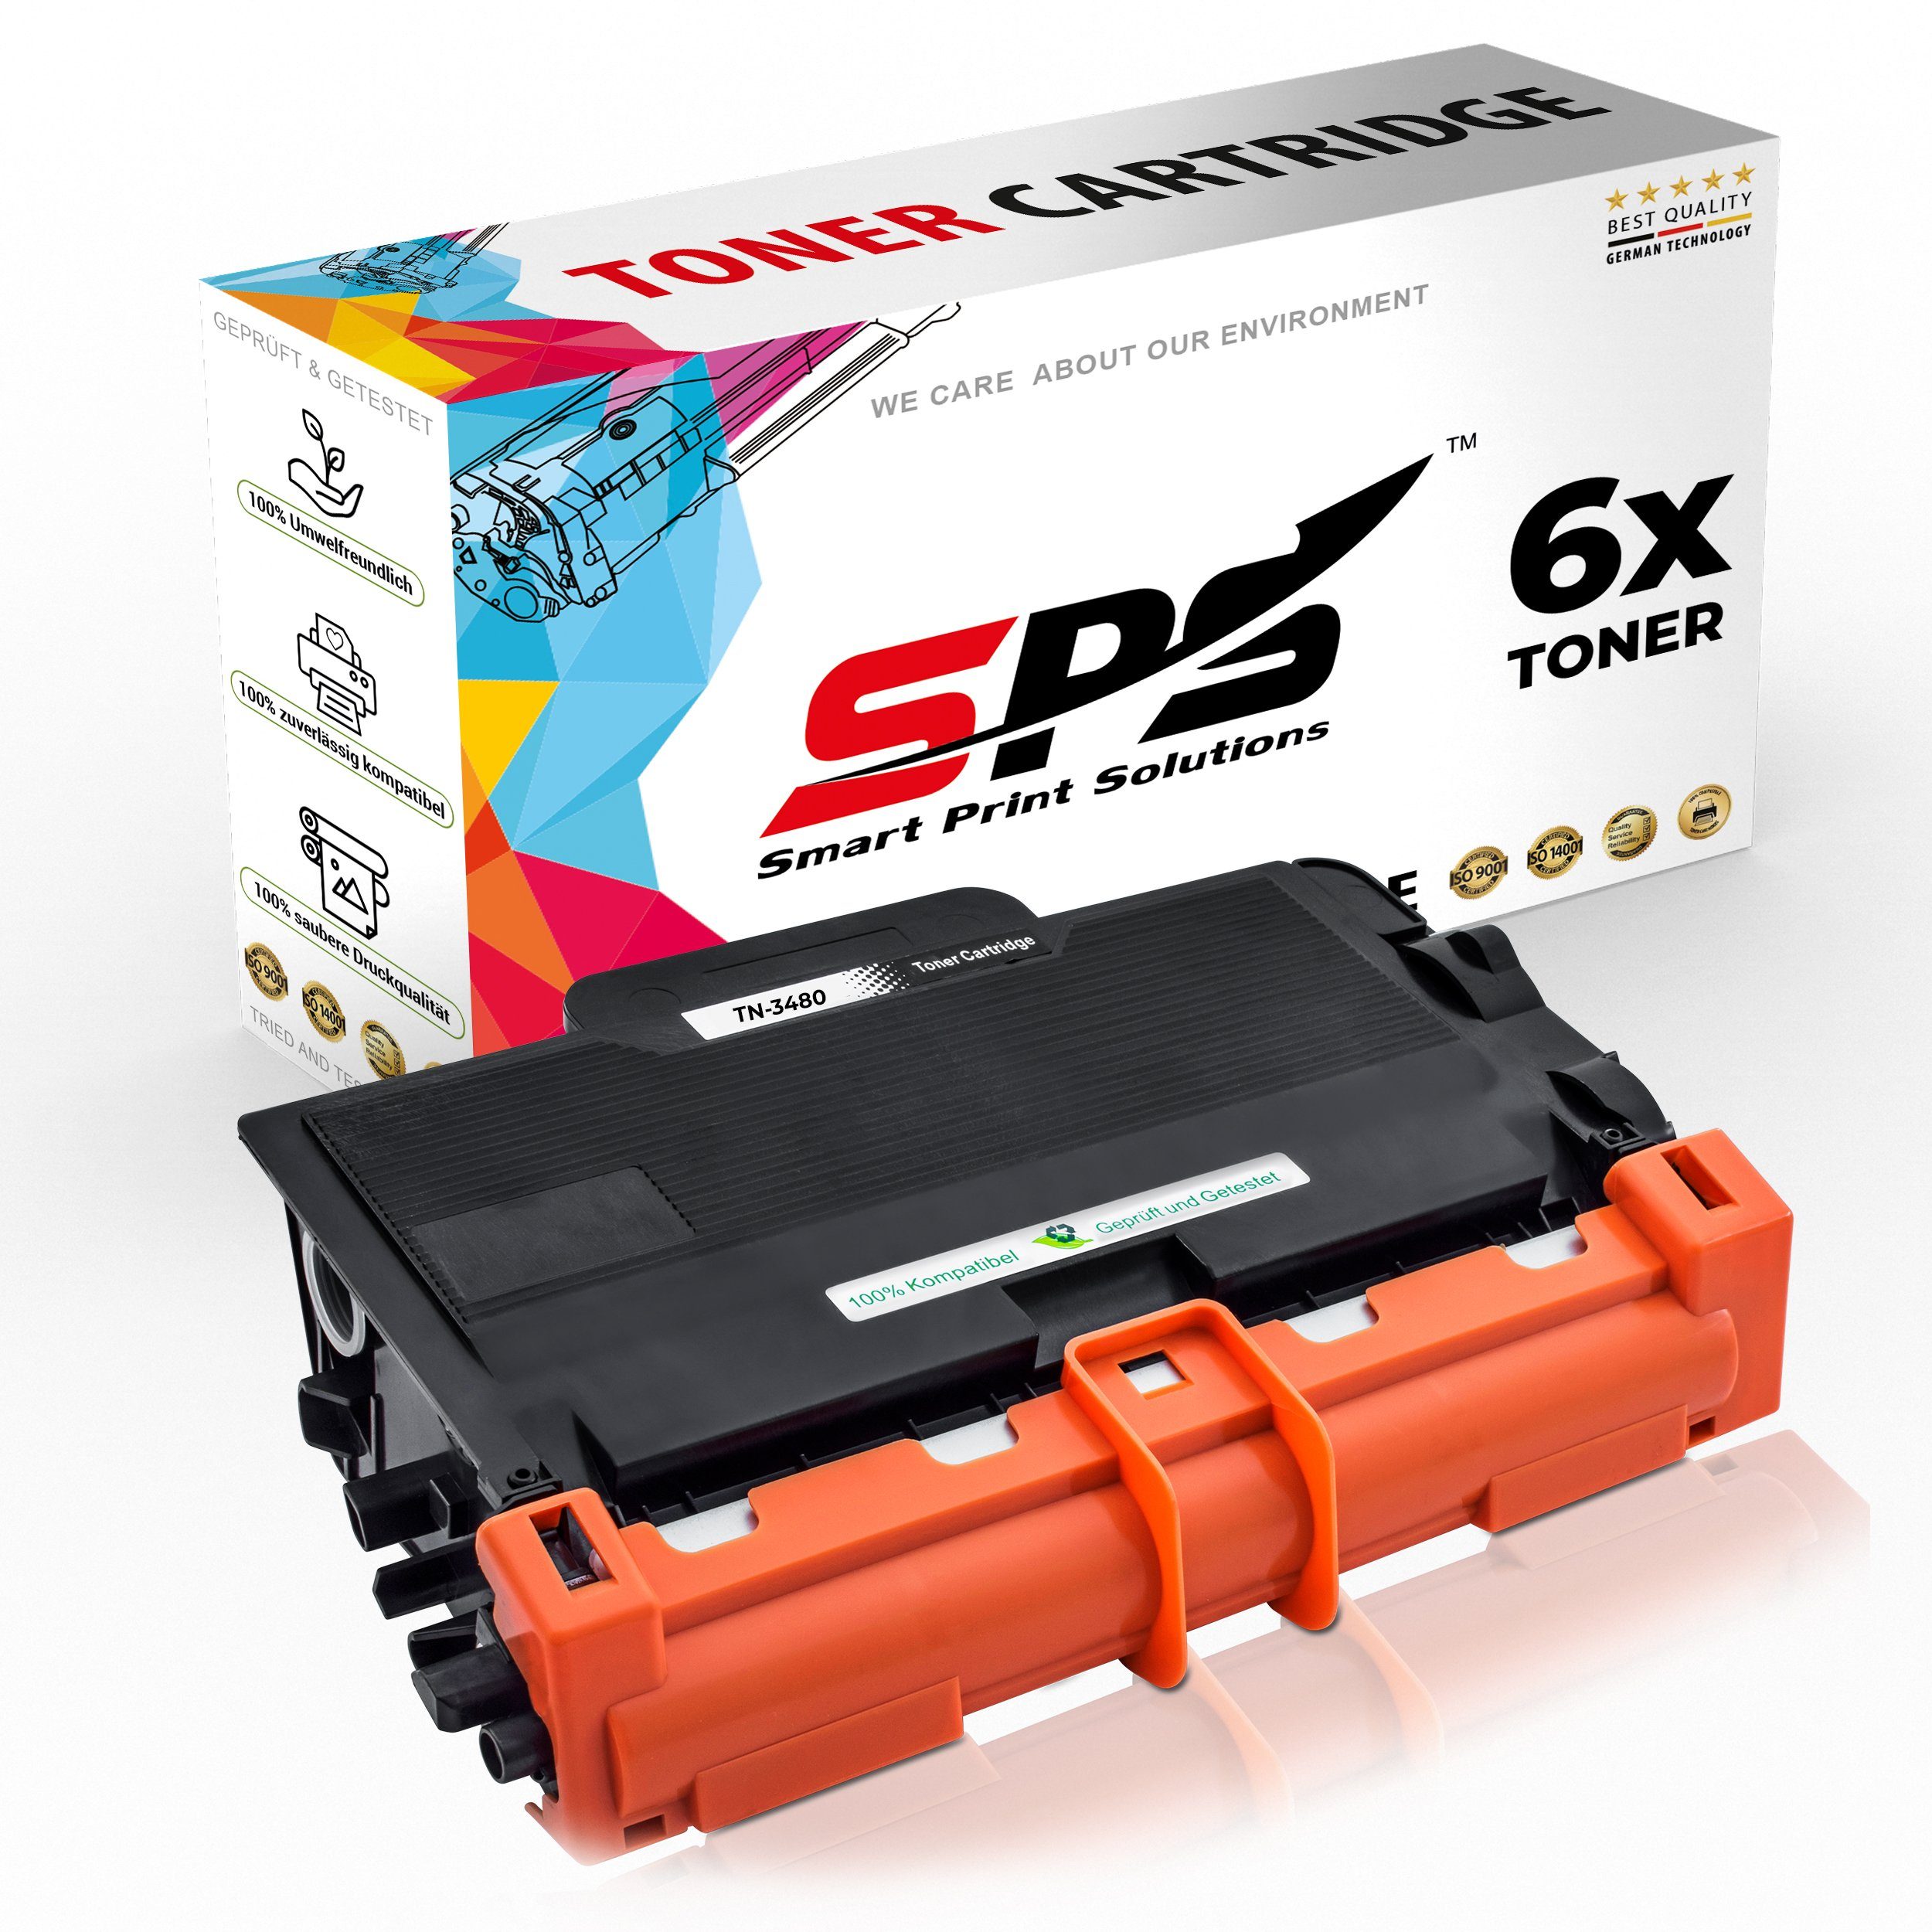 SPS Tonerkartusche Kompatibel für Brother HL-L5100 TN-3430, (6er Pack) | Tonerpatronen